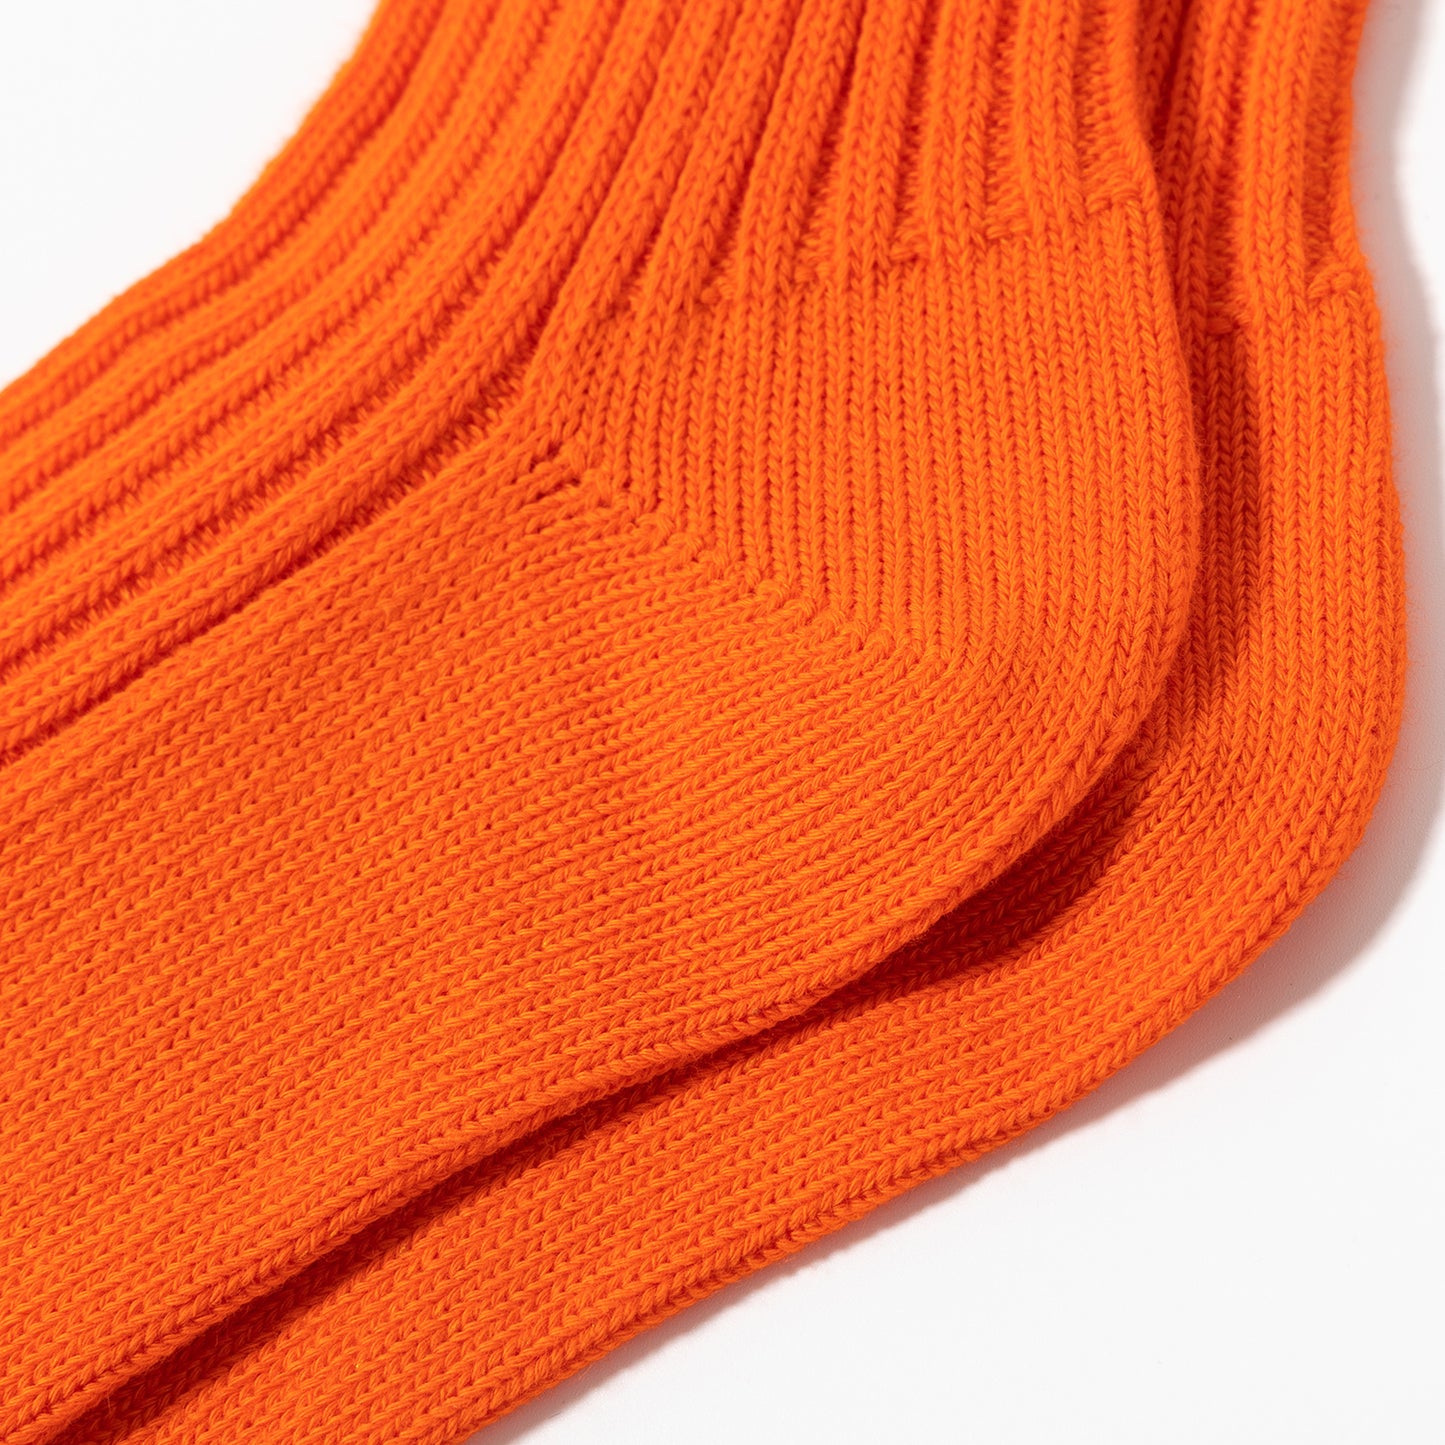 Socks Cotton standart, orange